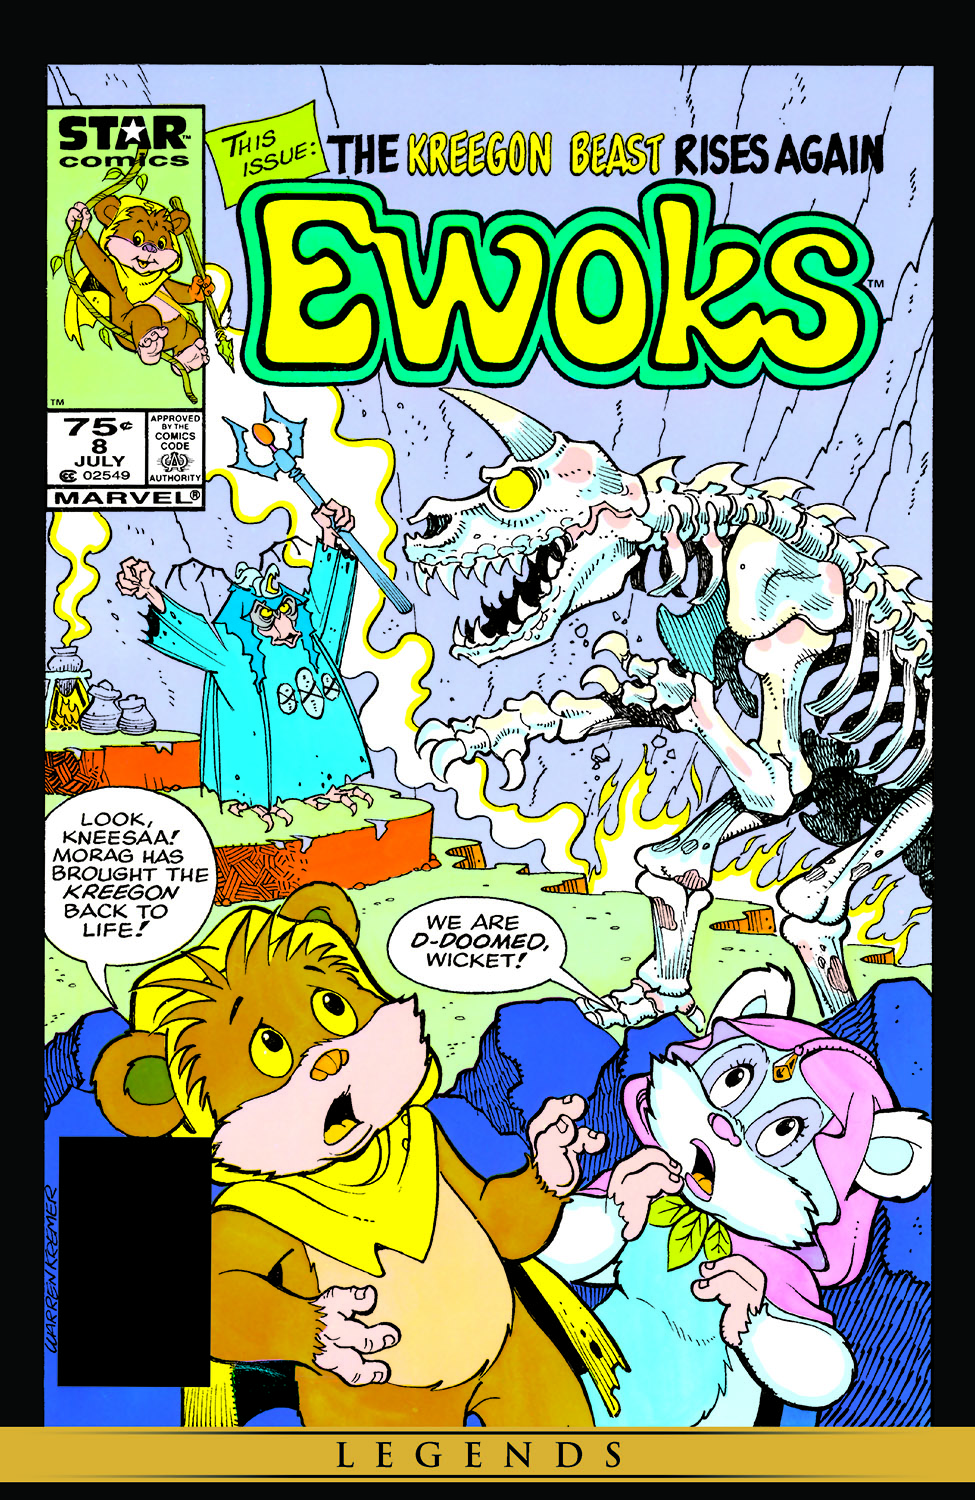 Star Wars: Ewoks (1985) #8